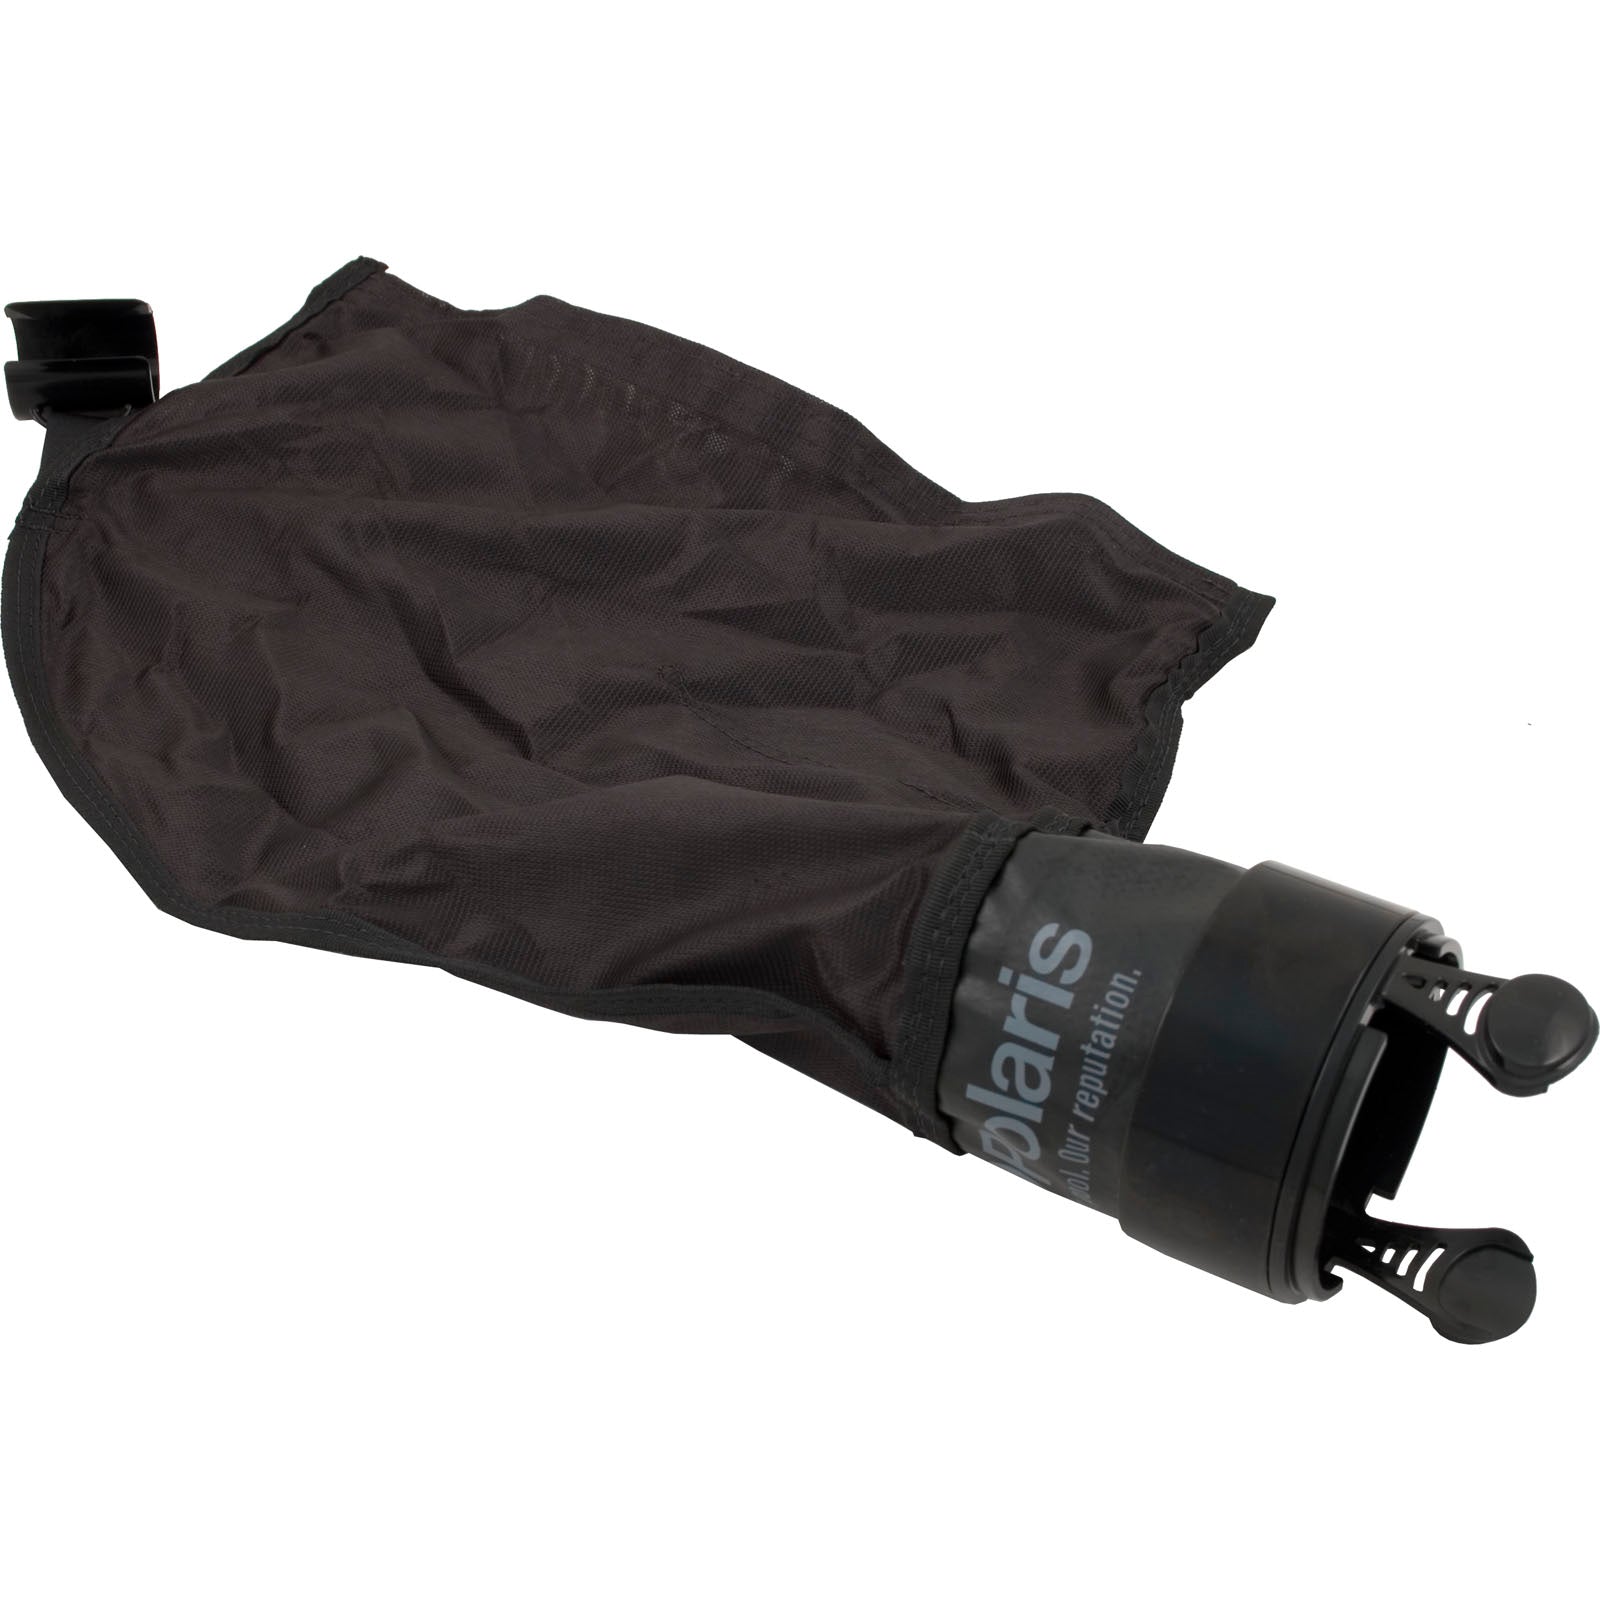 Zodiac Polaris K17 All Purpose Bag Black for Polaris Vac-Sweep 280/360 Pool Cleaners